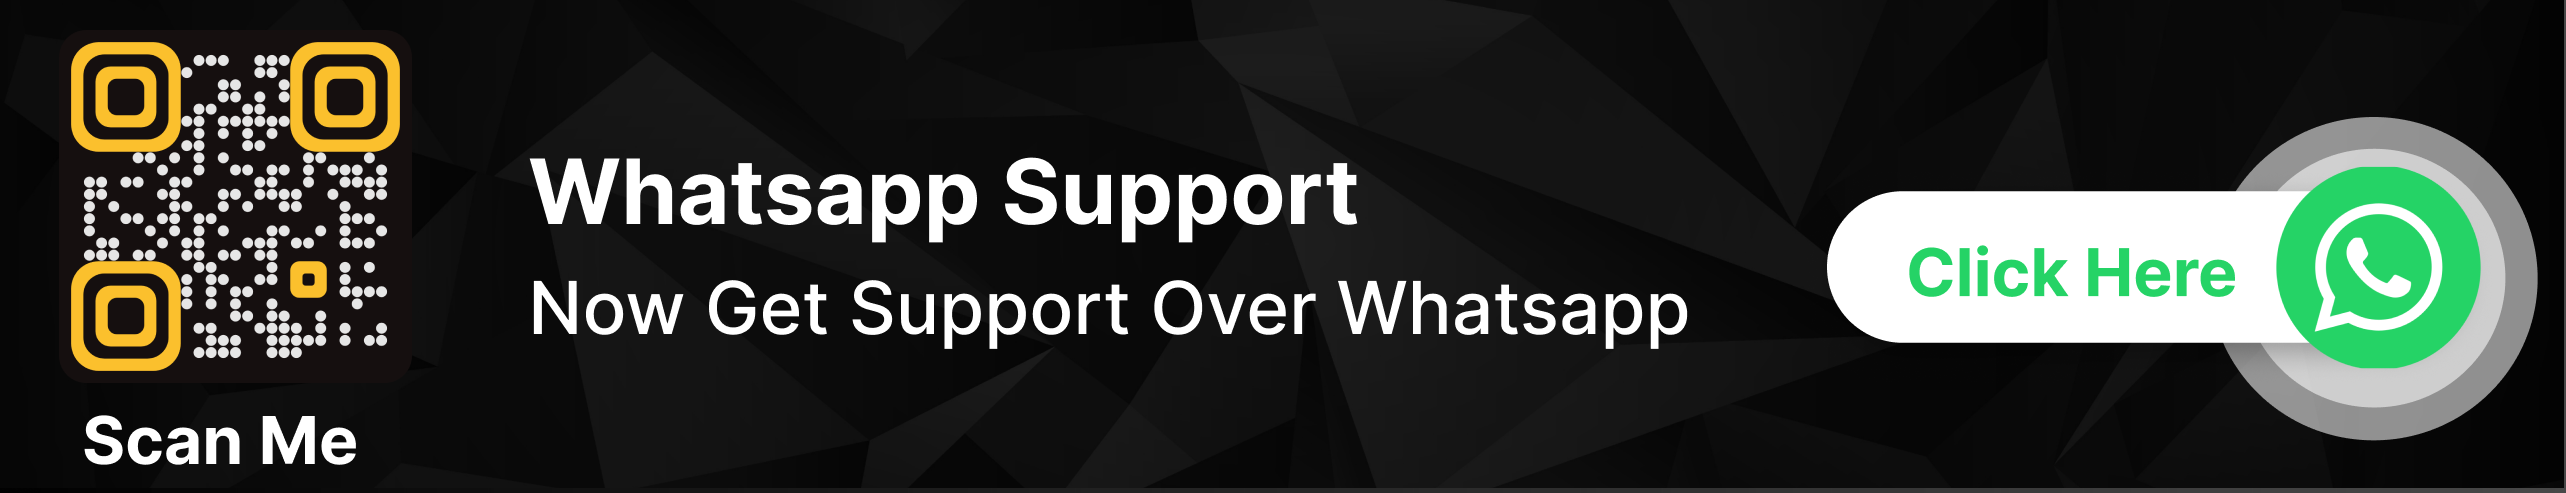 Whatsapp-support